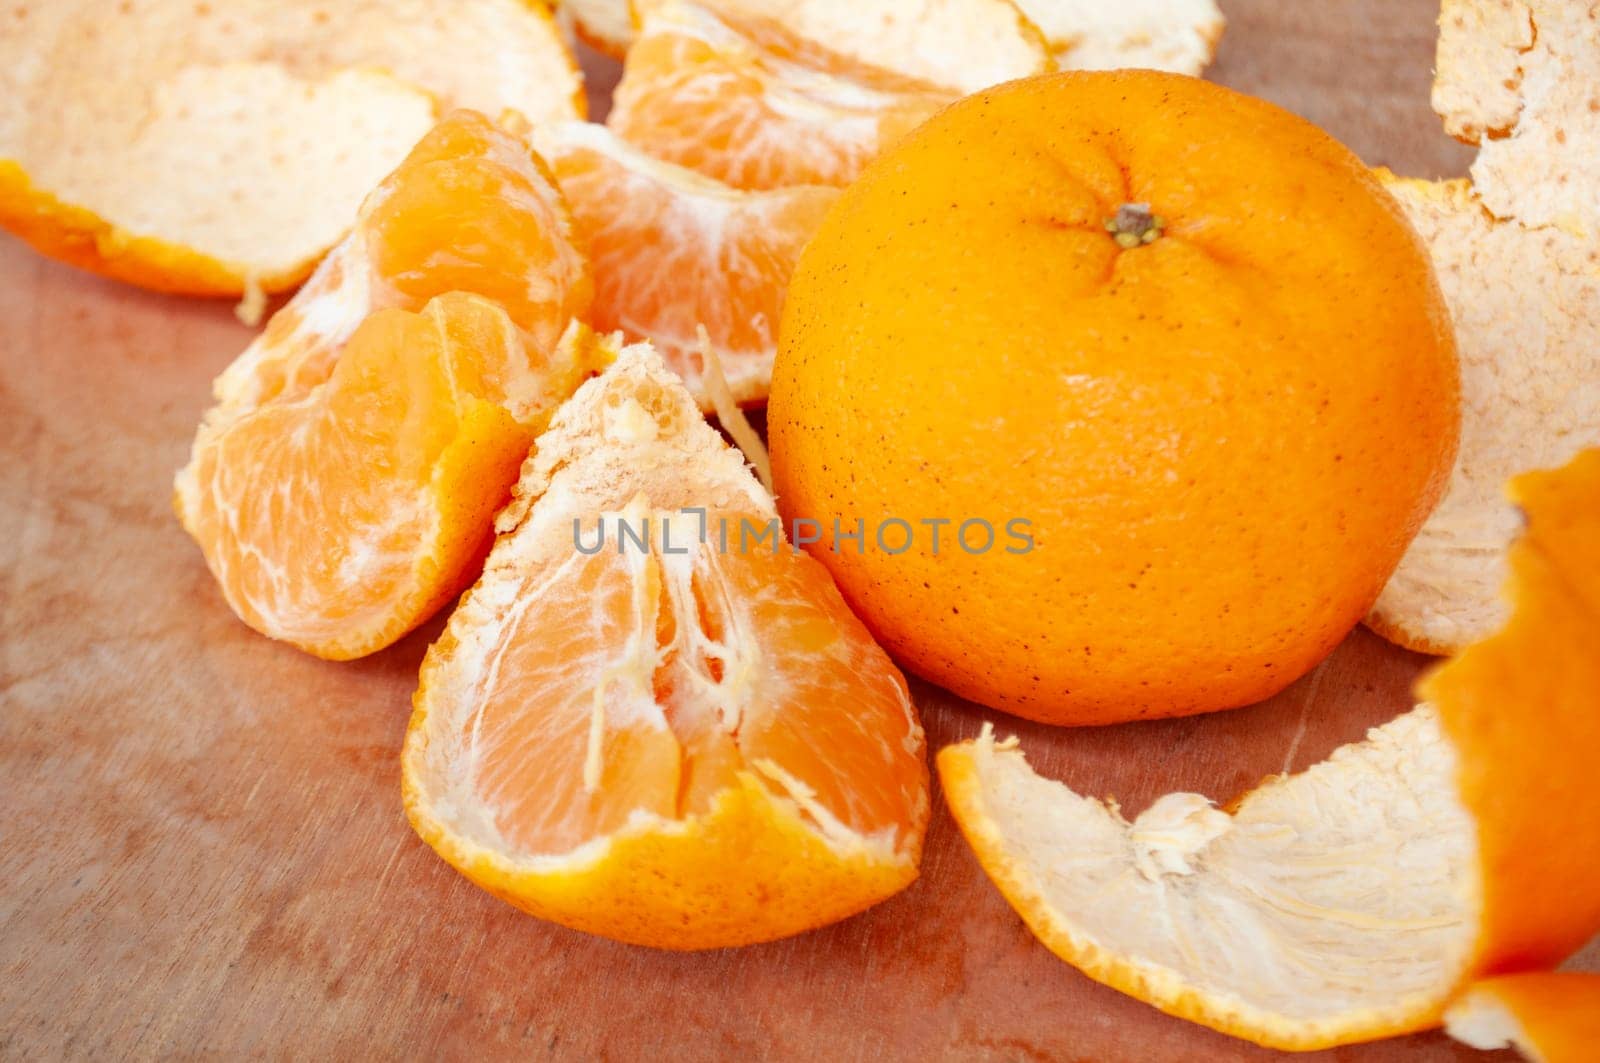 Pealed Mandarin oranges on wooden table background.